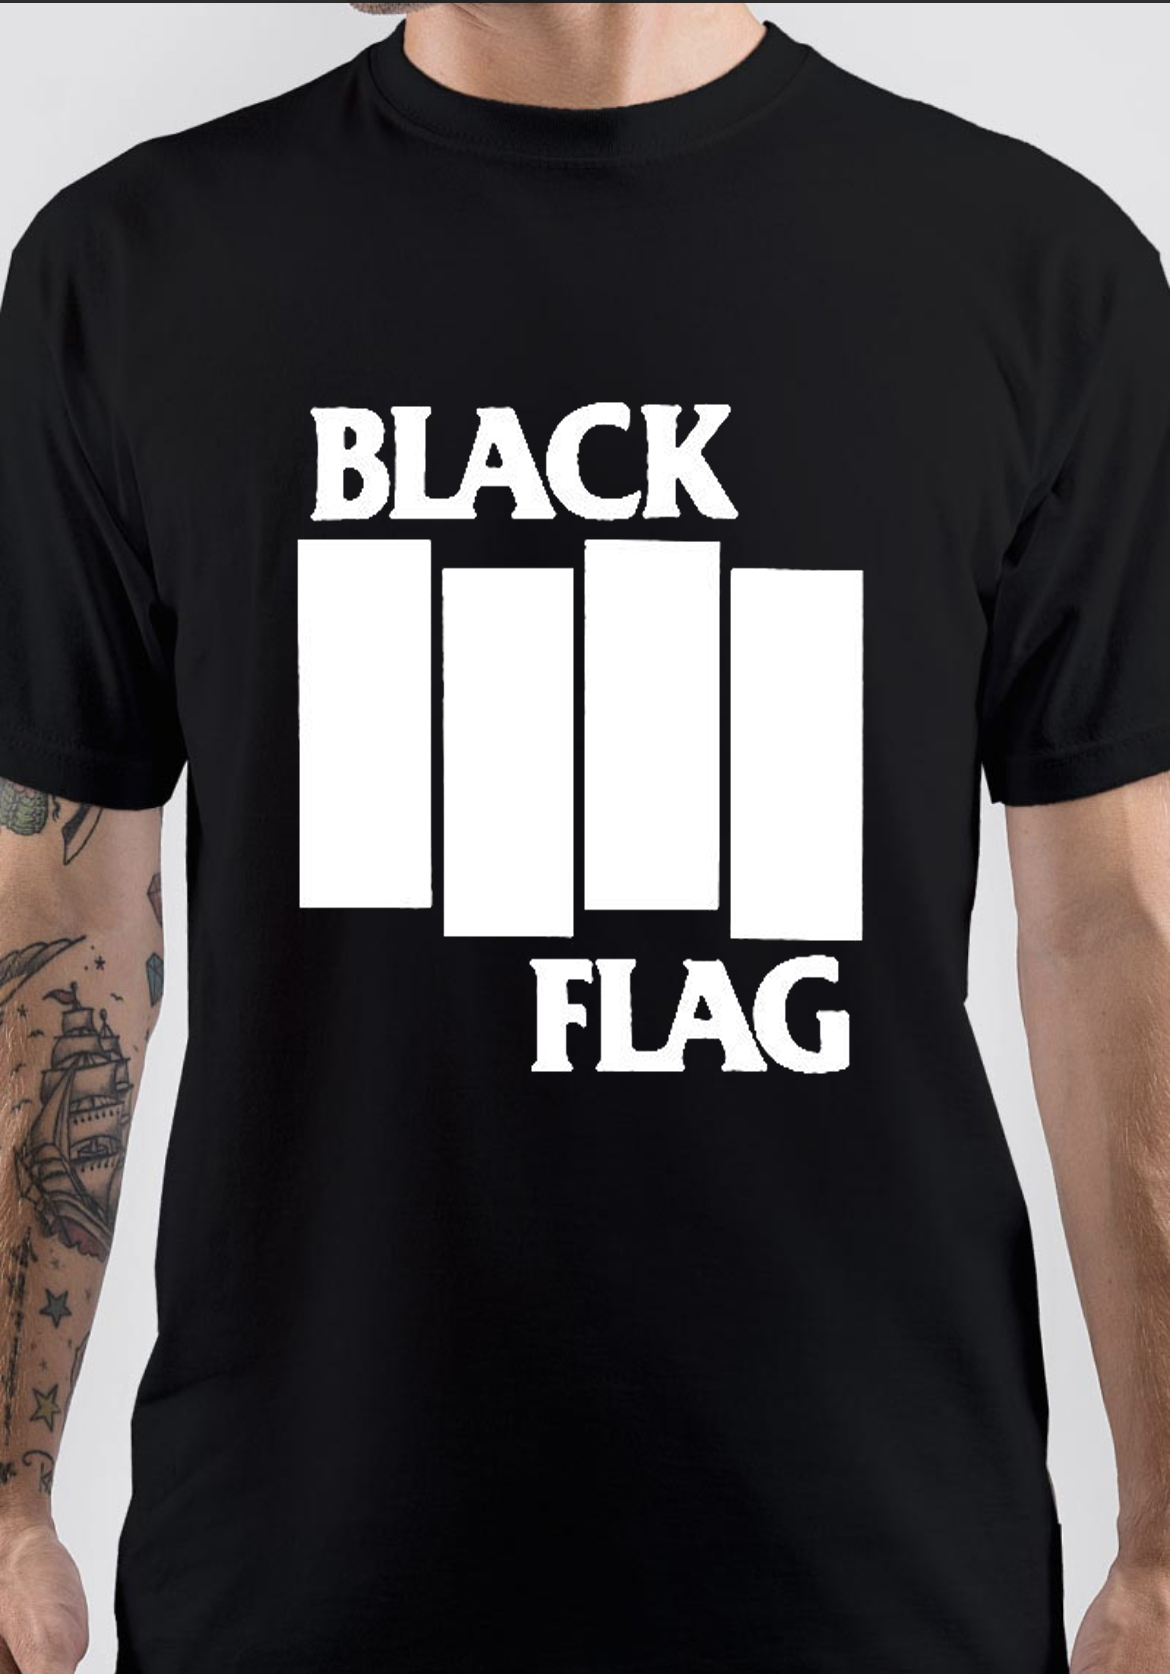 Black Flag T-Shirt And Merchandise